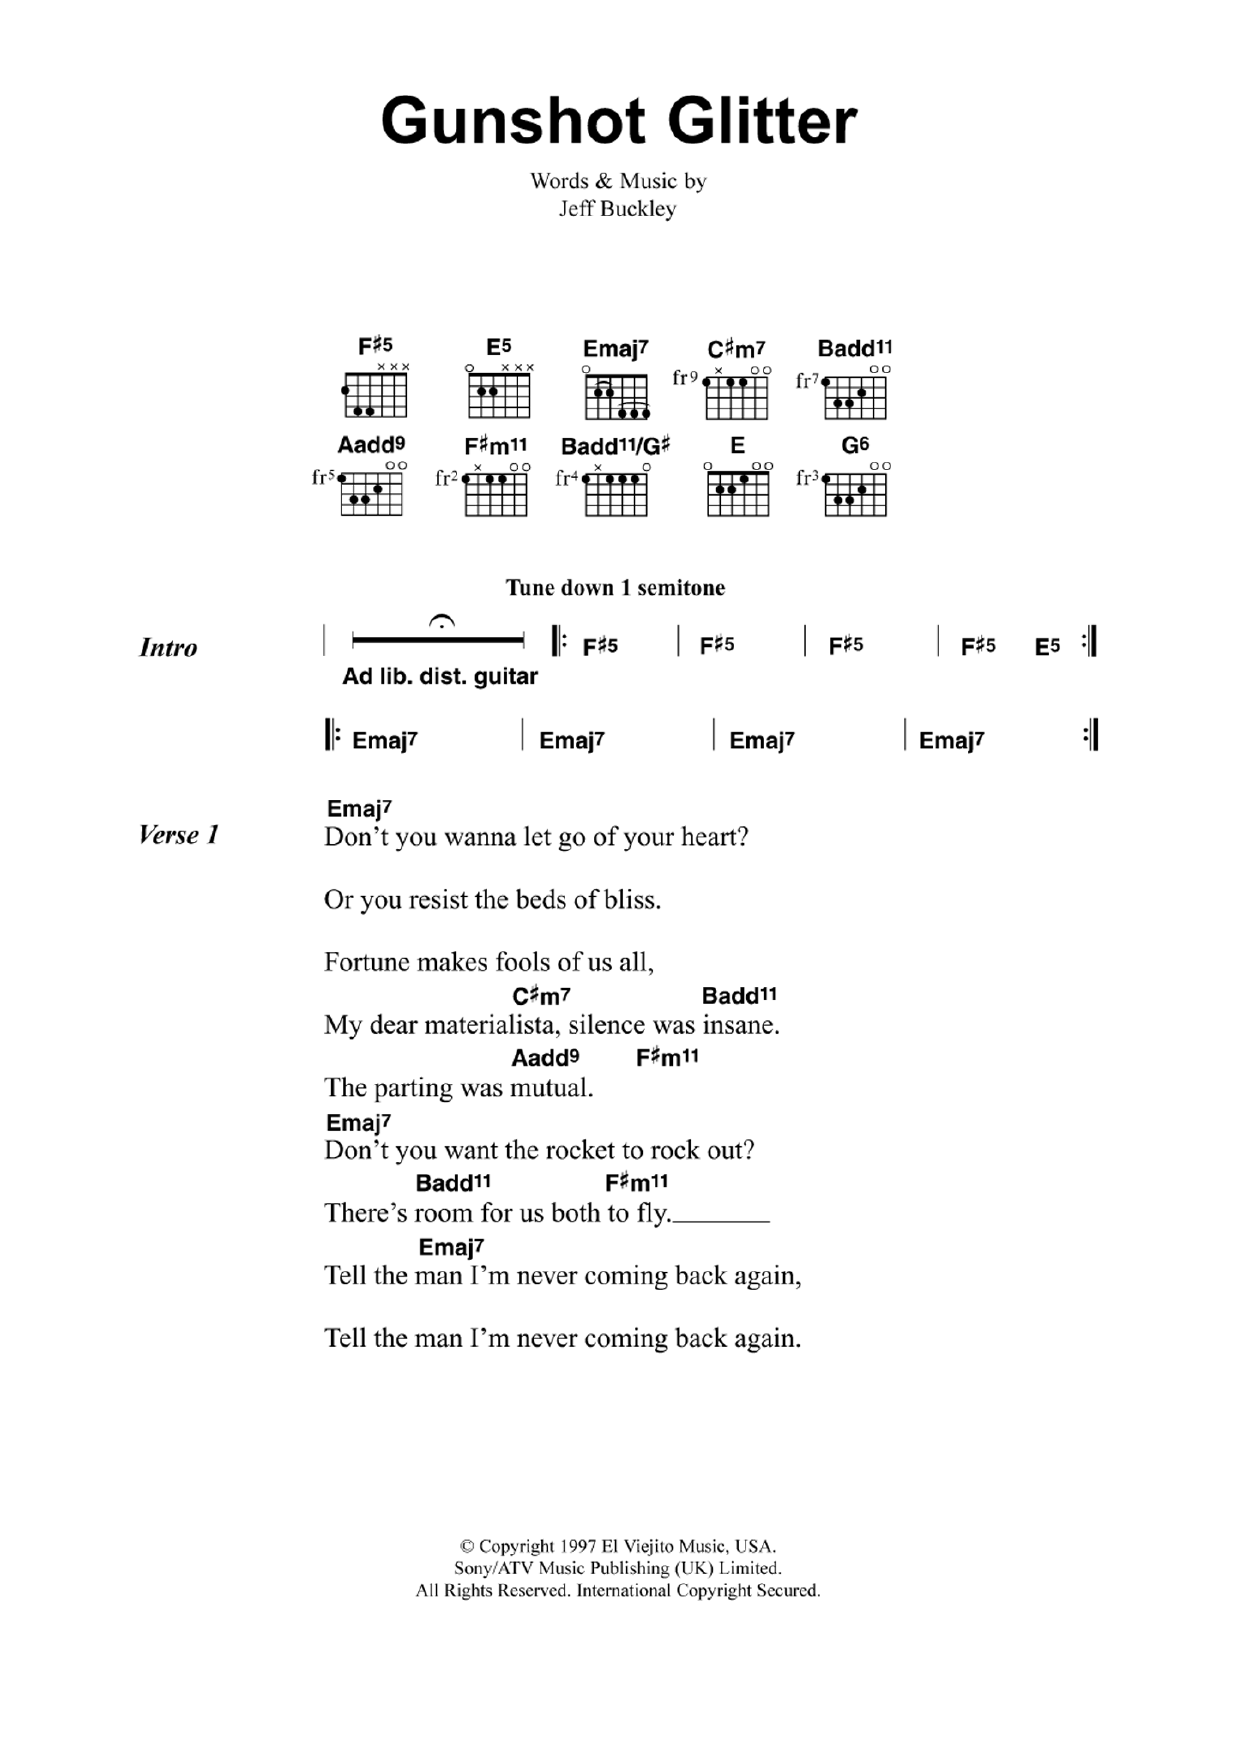 Jeff Buckley Gunshot Glitter Sheet Music Notes & Chords for Lyrics & Chords - Download or Print PDF